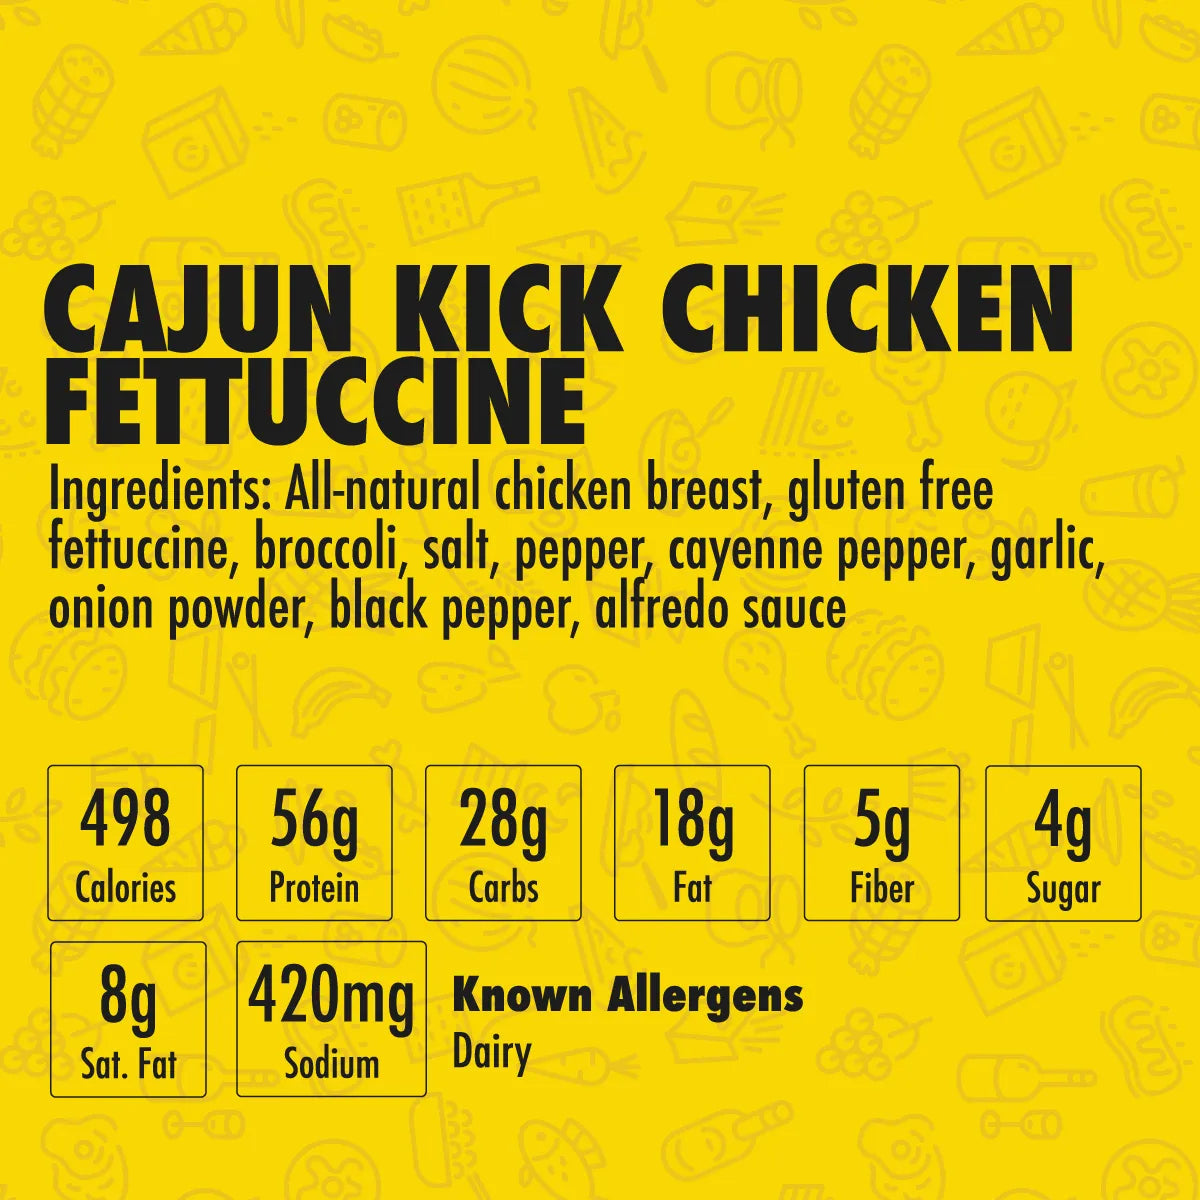 Cajun Kick Chicken Fettuccine